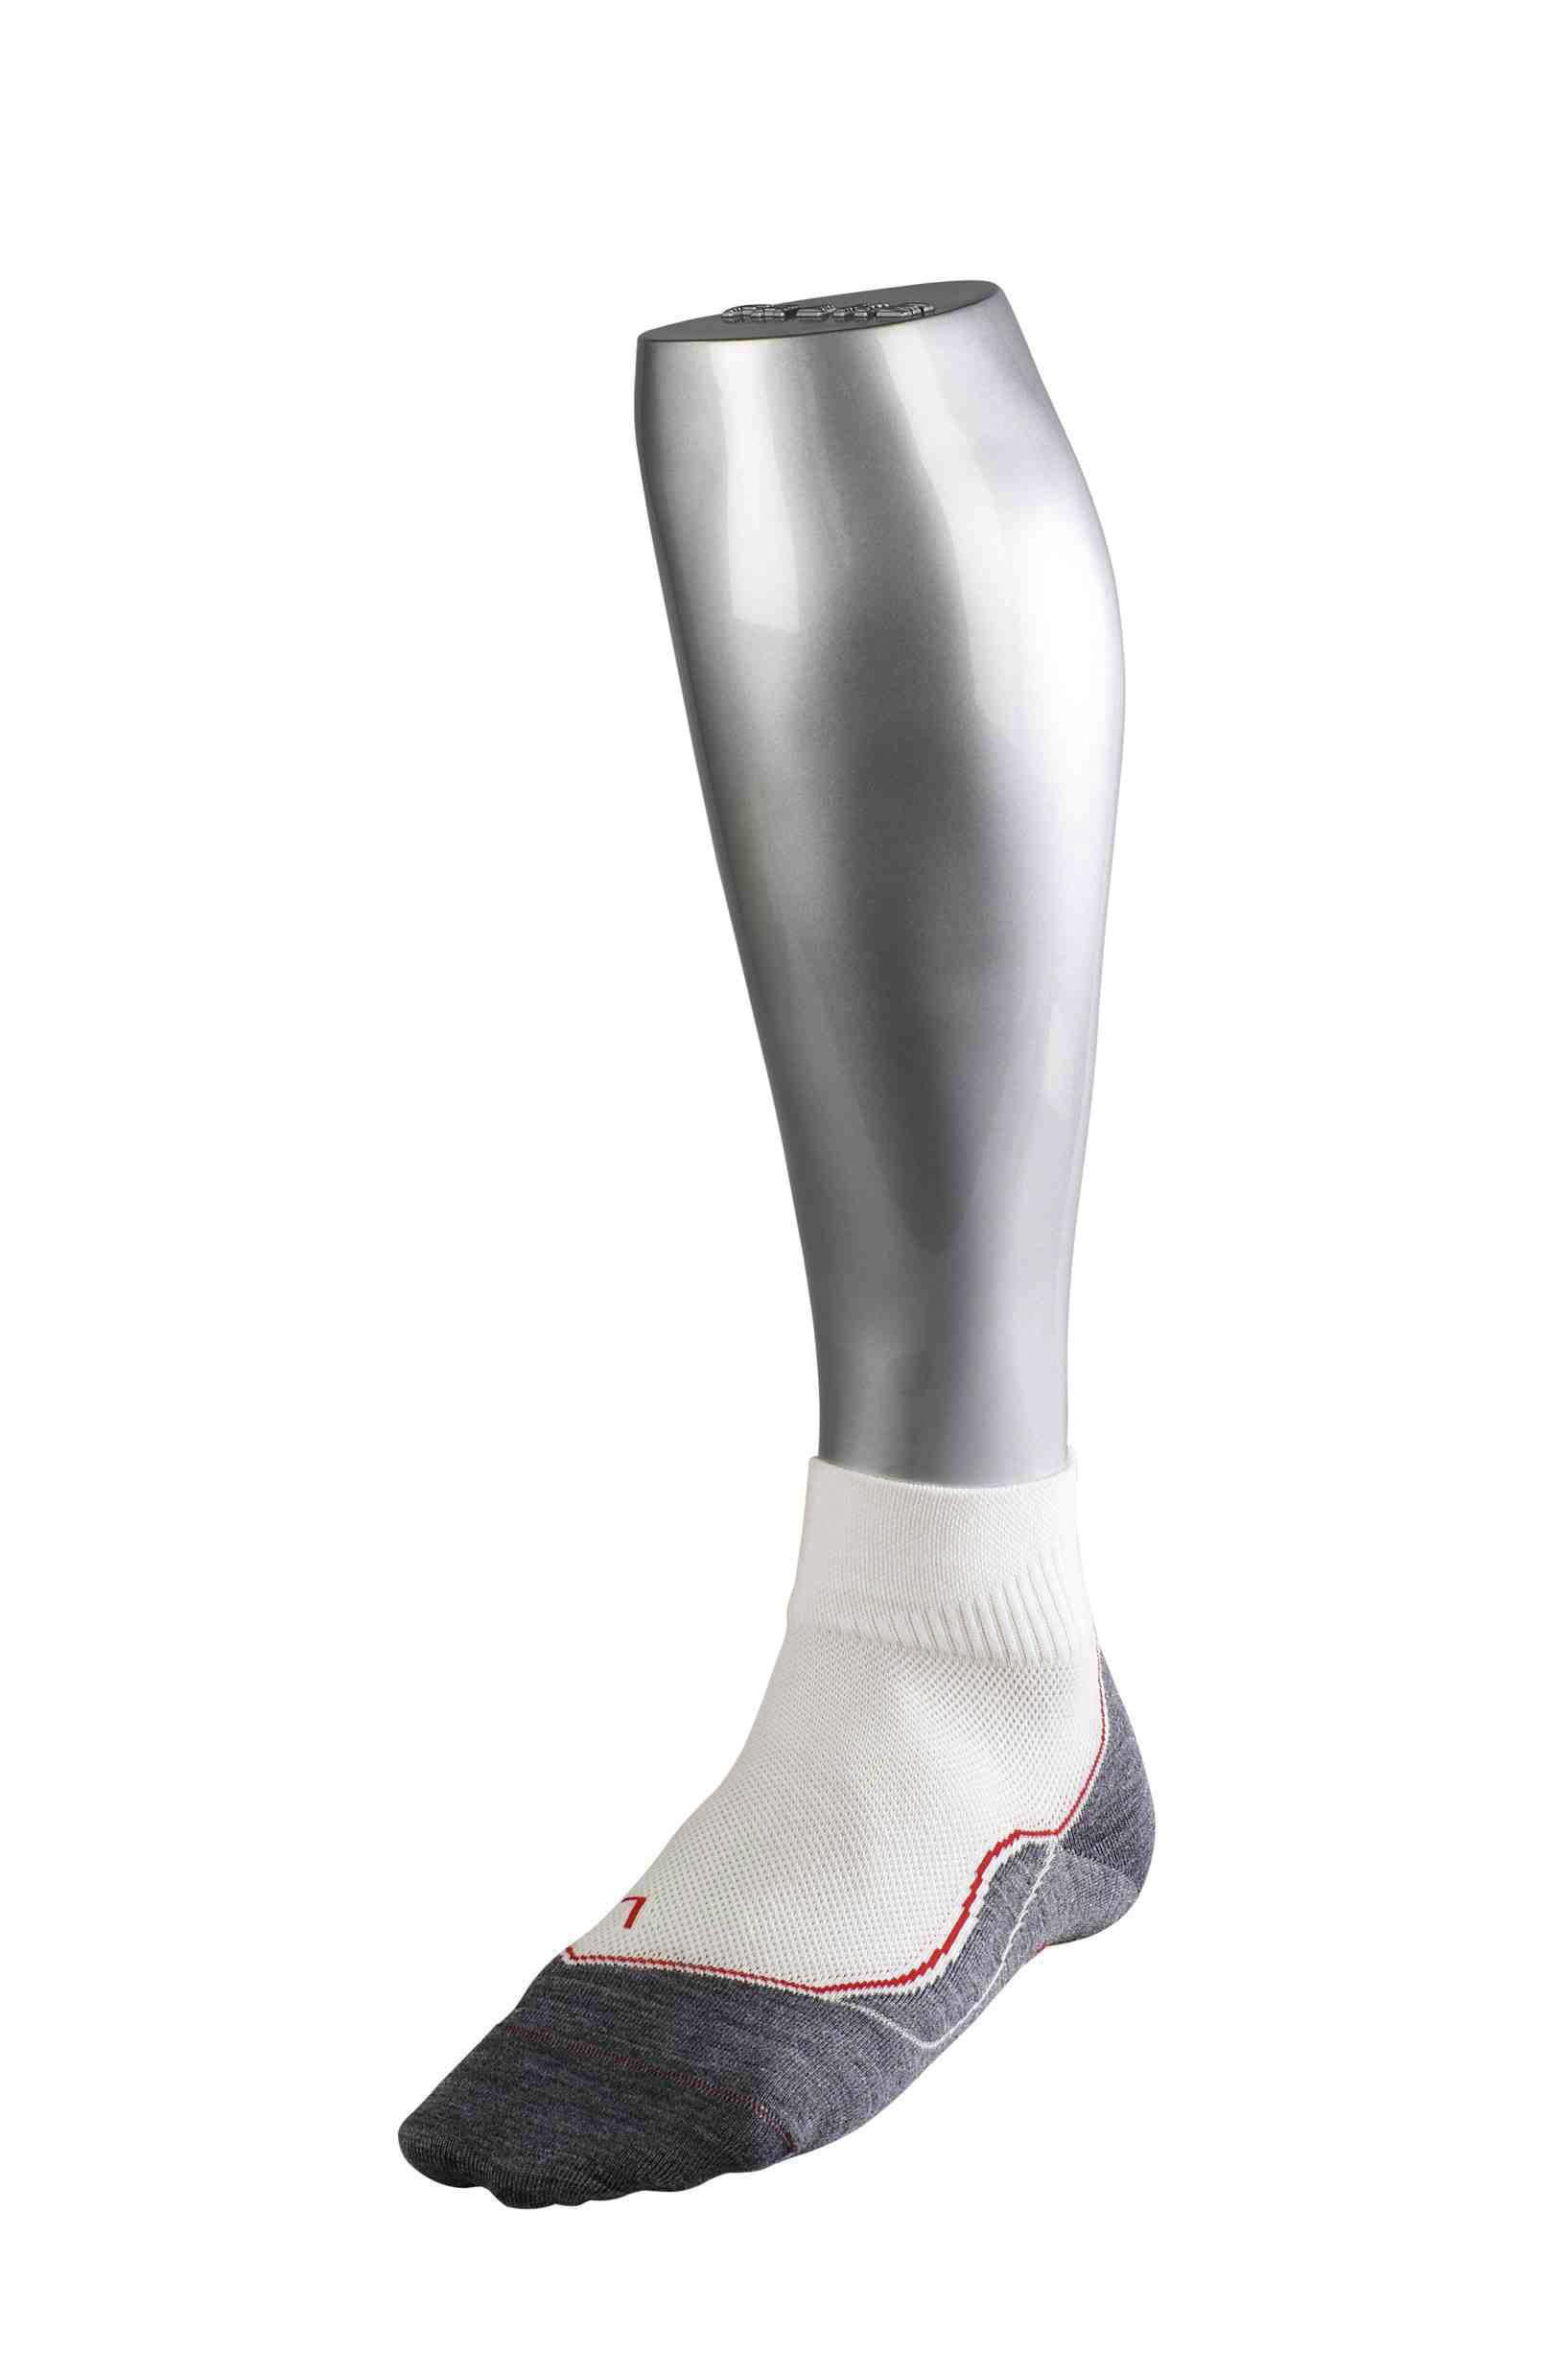 Foto Calcetines para correr Falke RU5 gris/blanco para mujer , 39-40